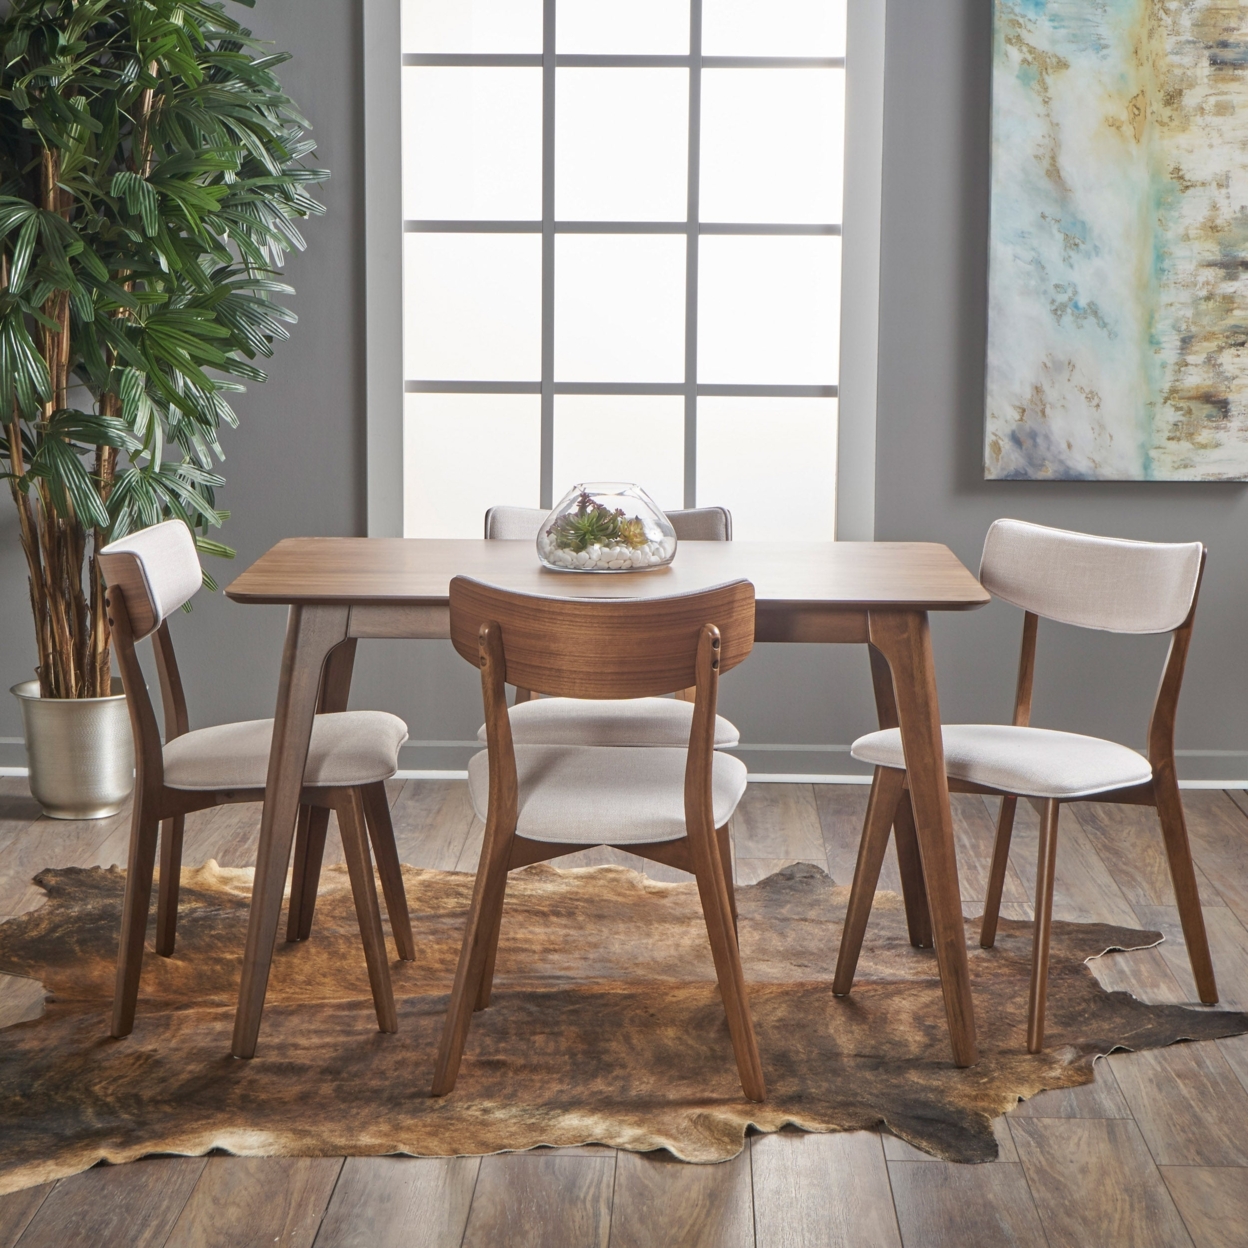 GDF Studio Leora Mid Century Modern Wood Fabric Upholstered 5 Piece Dining Set, Light Beige and Walnut - image 3 of 3